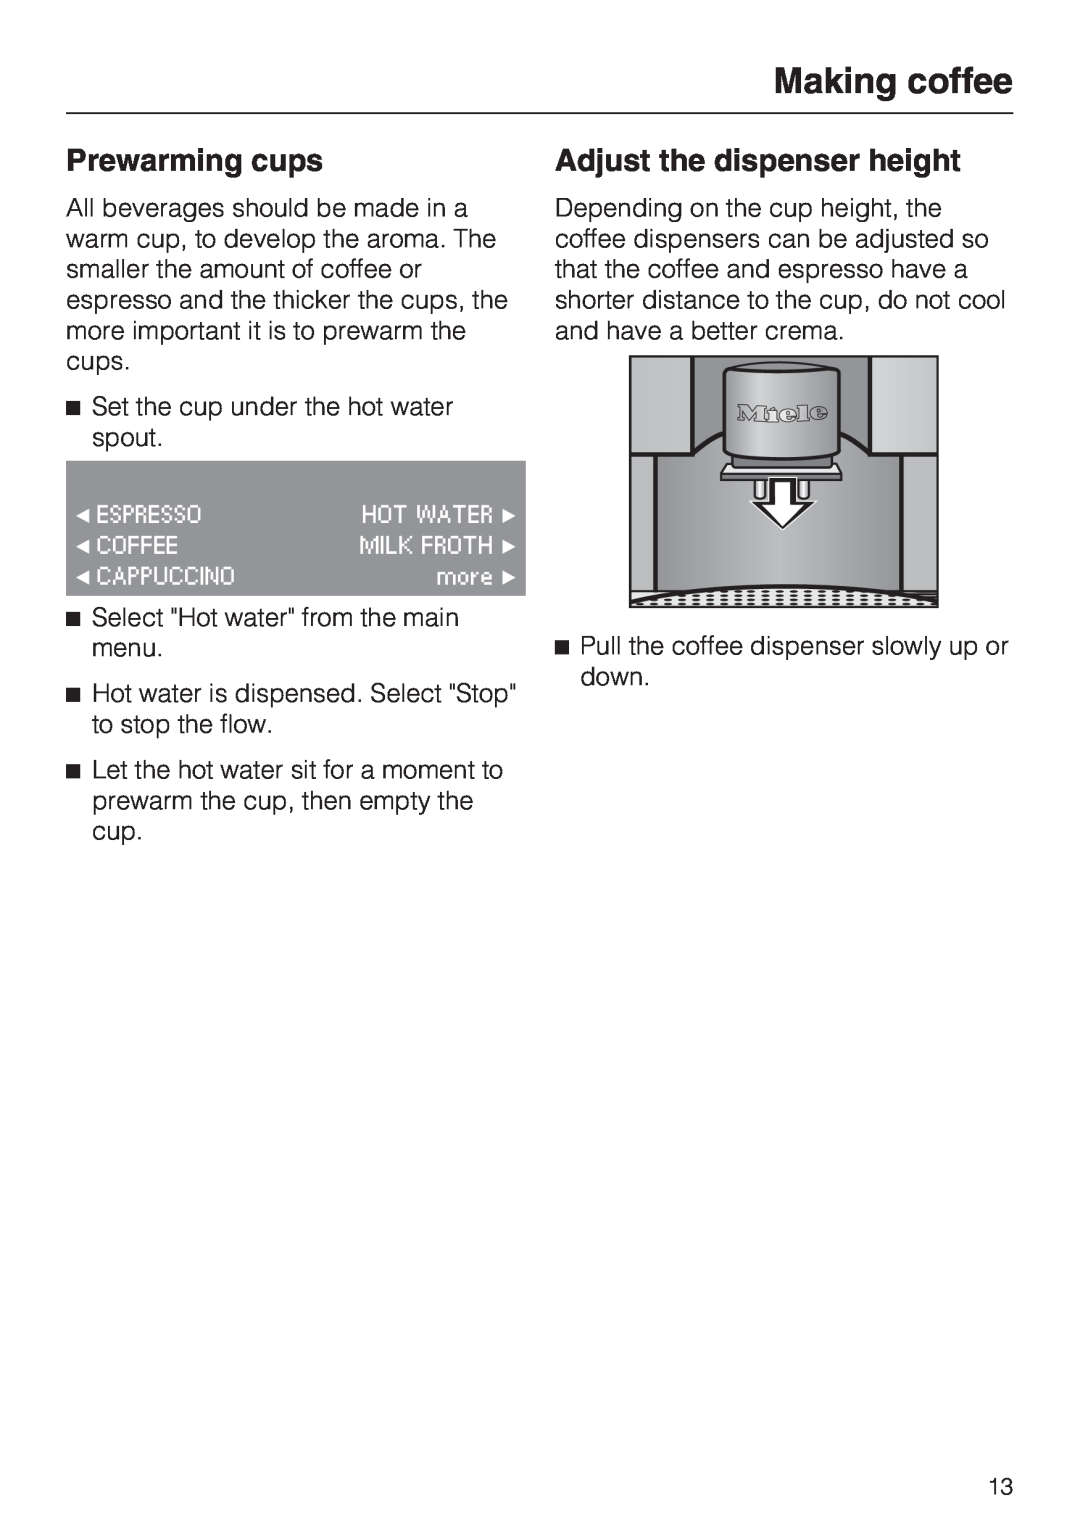 Miele CVA 4070 installation instructions Prewarming cups, Adjust the dispenser height, Making coffee 